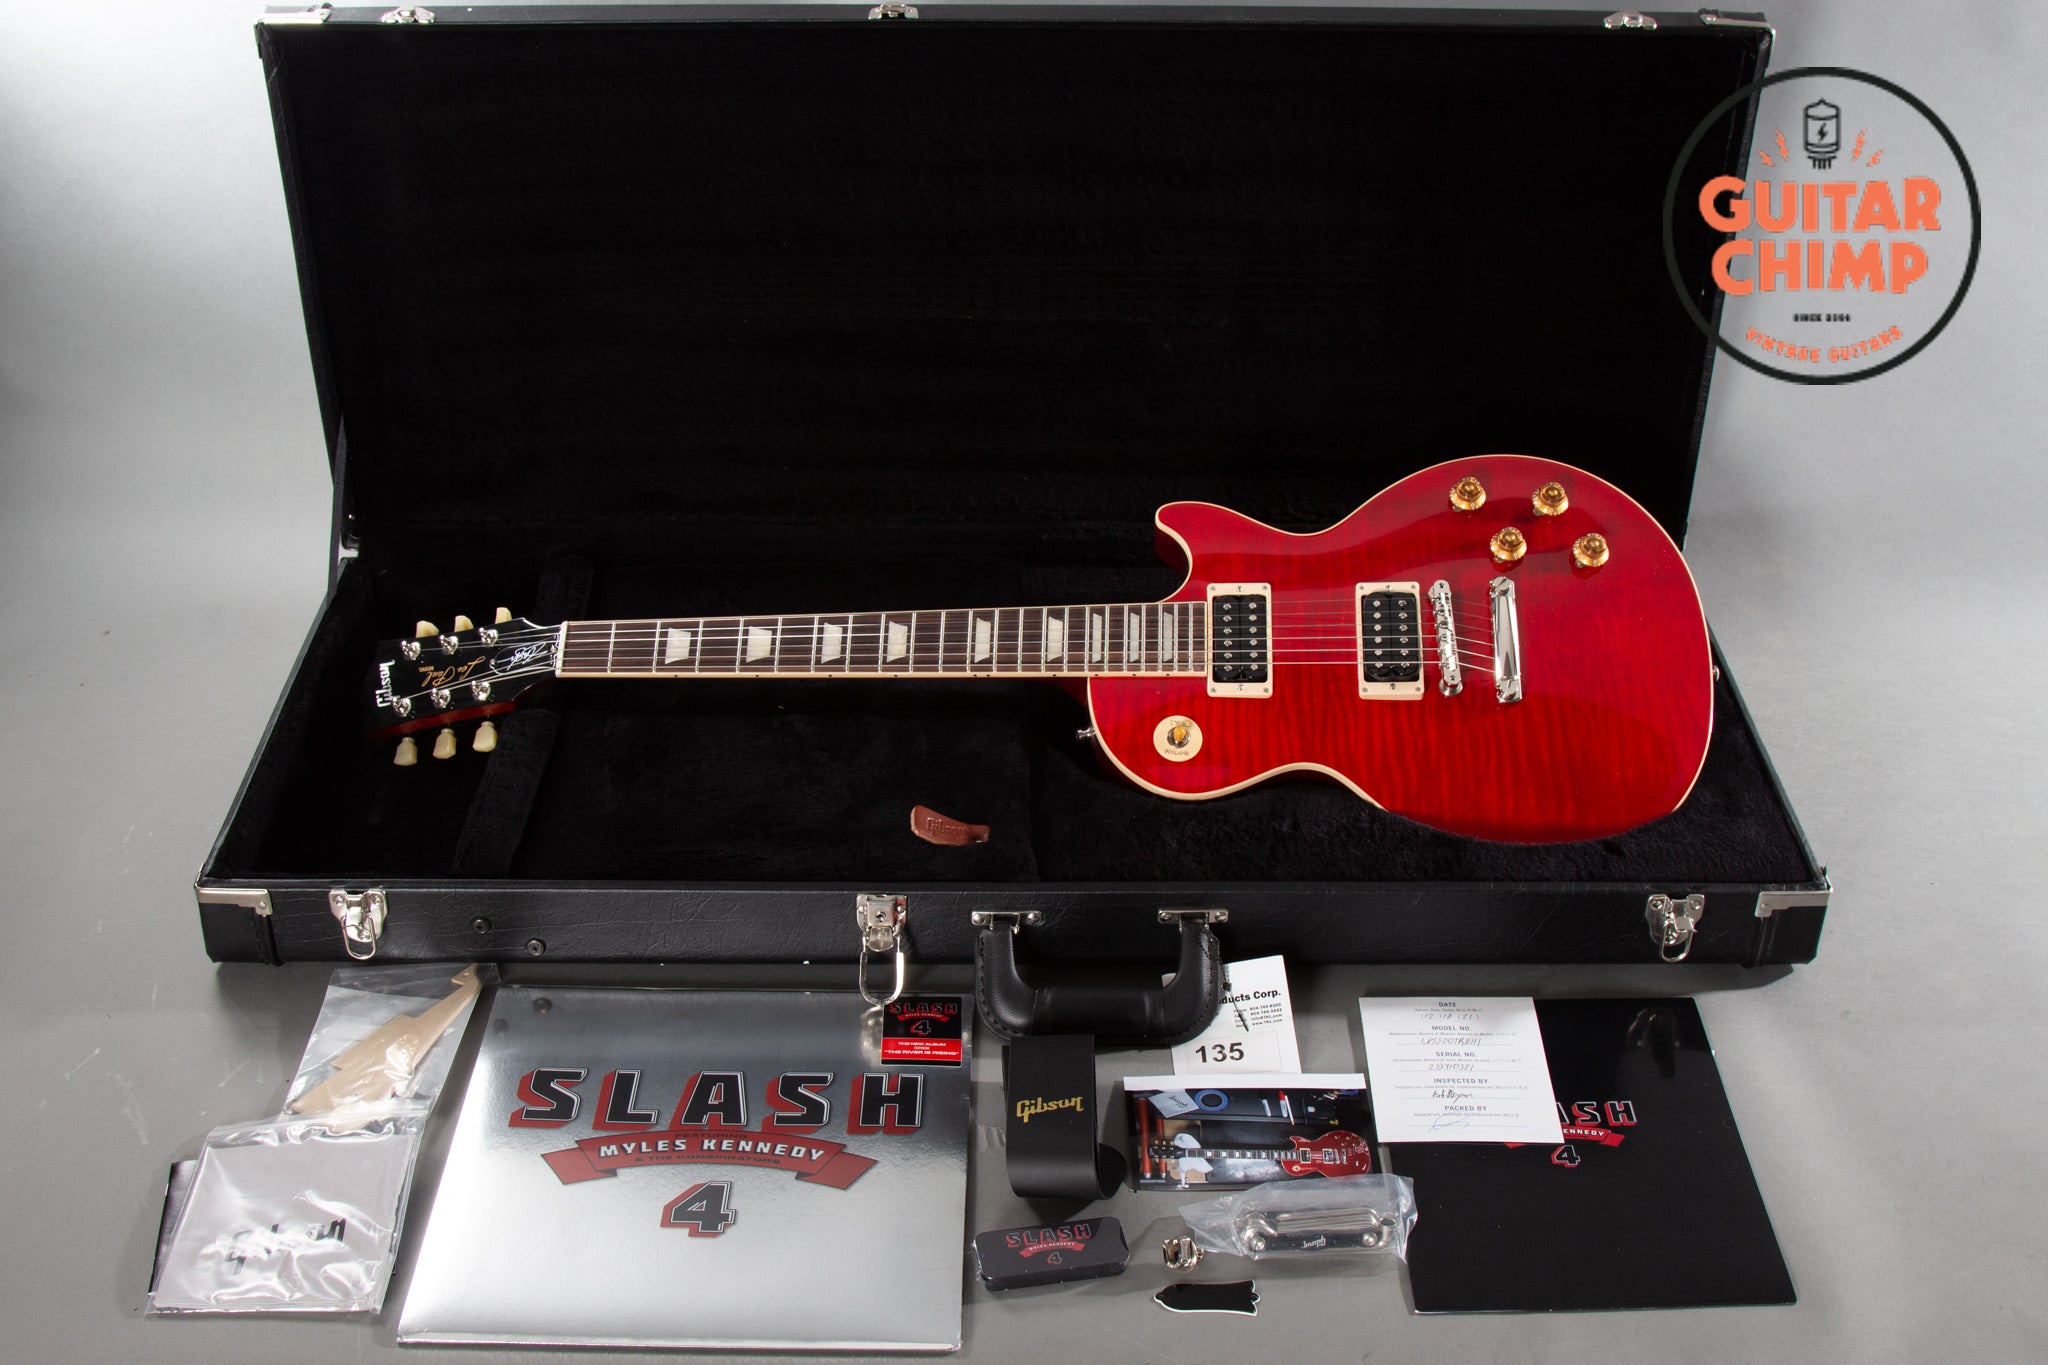 Slash's Guitars  Live, studio and Signature Les Paul